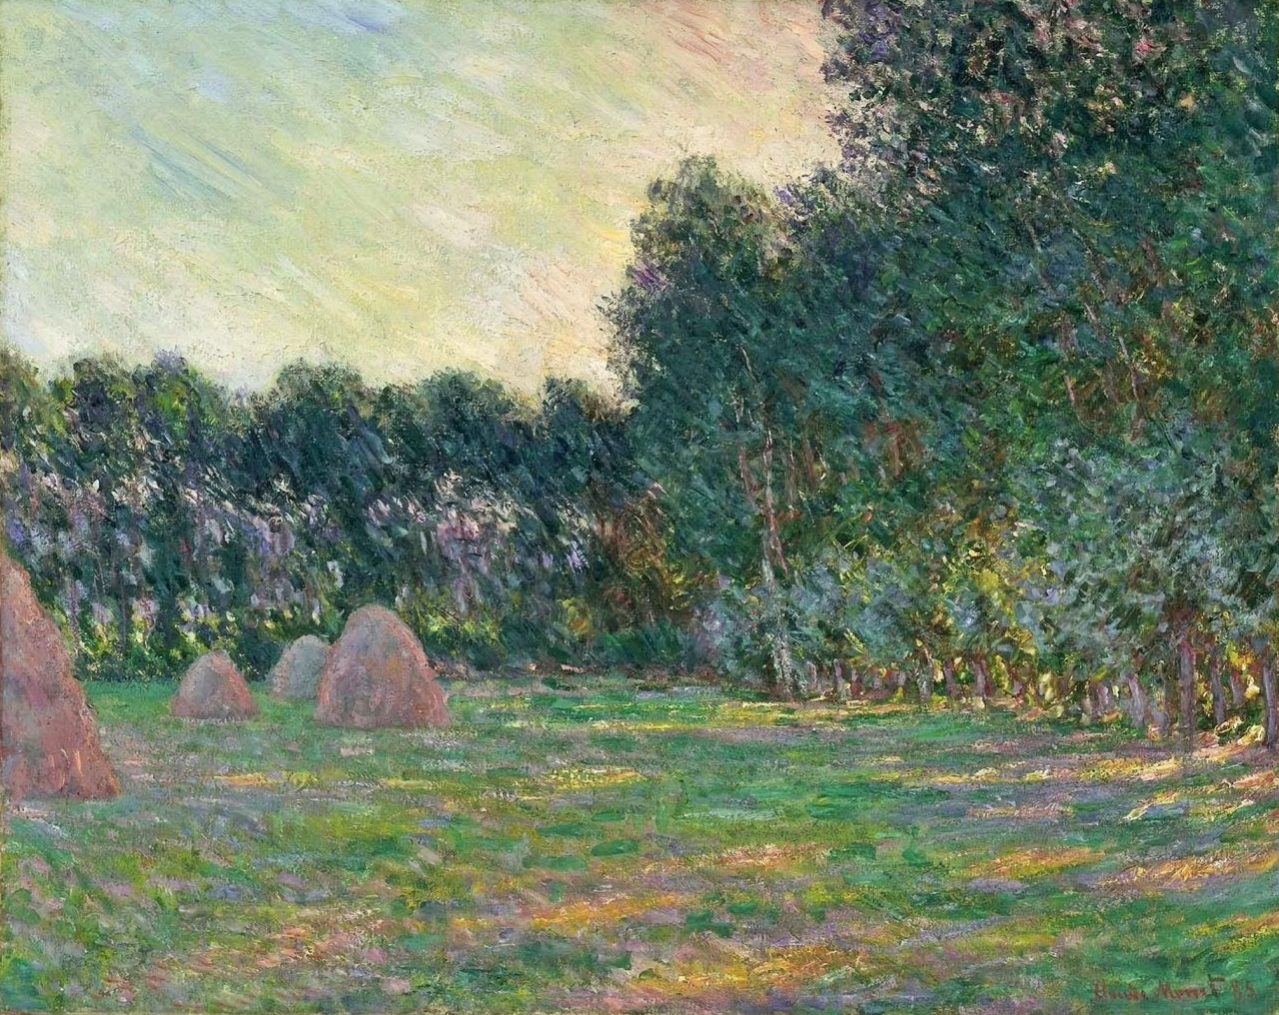 Claude+Monet-1840-1926 (296).jpg